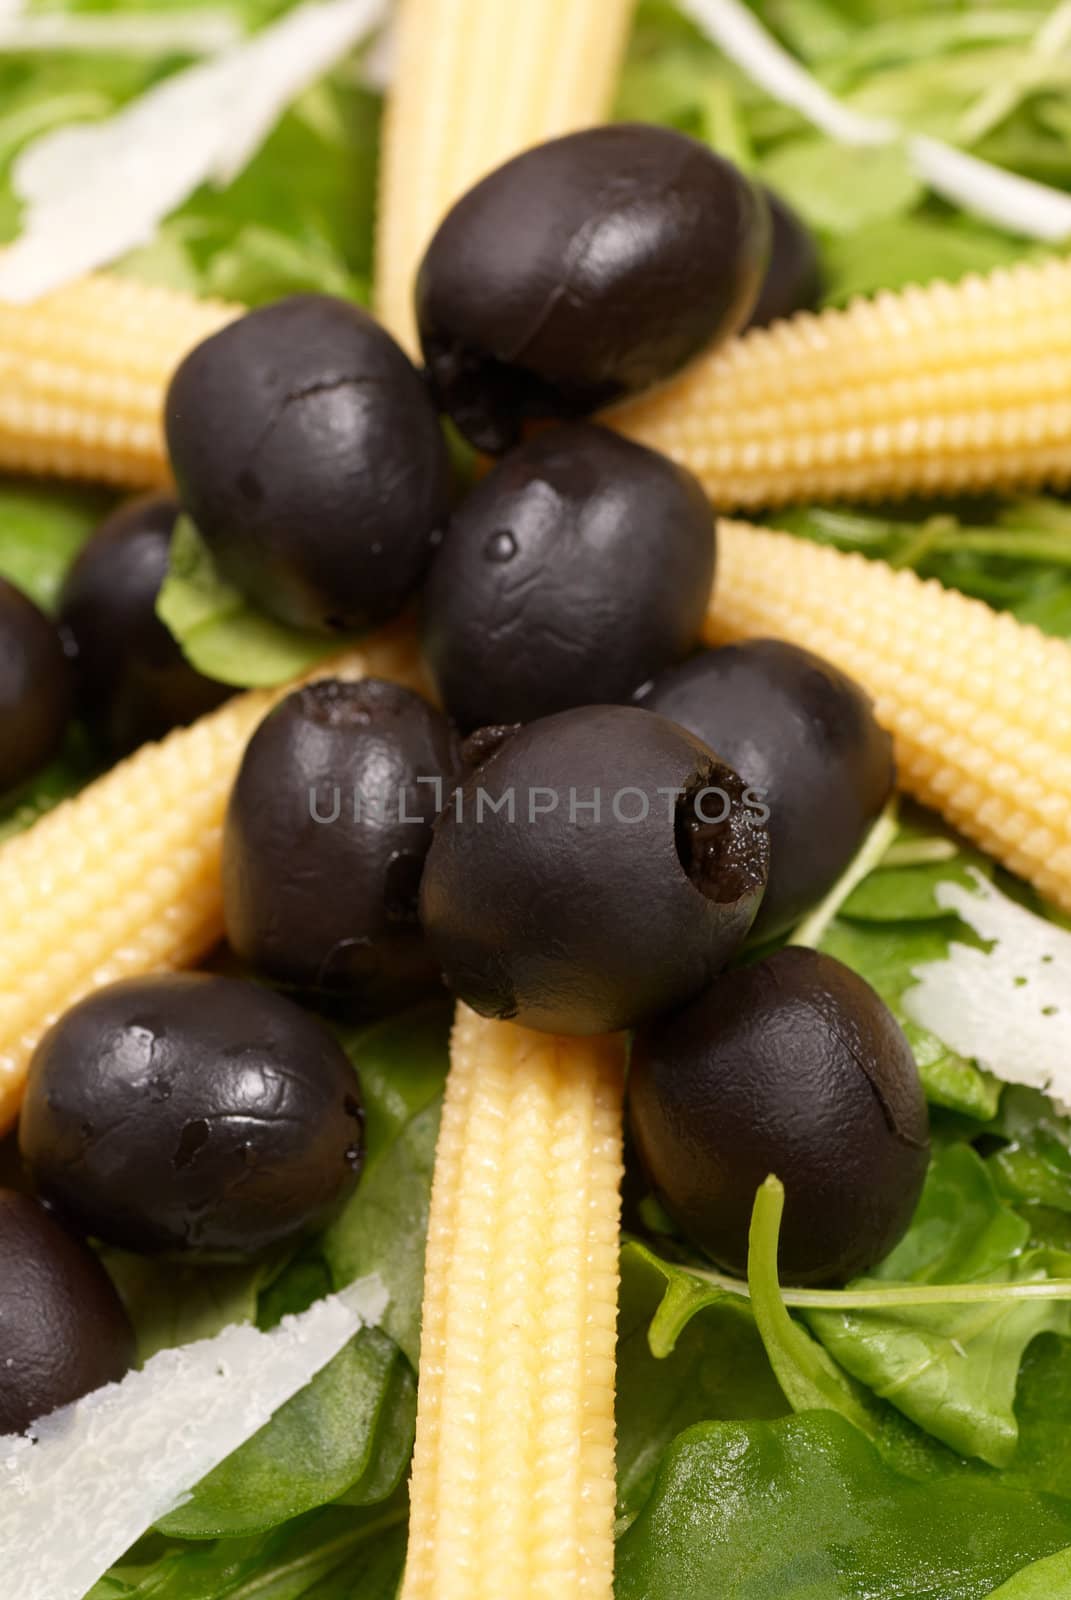 Baby corn salad by hemeroskopion